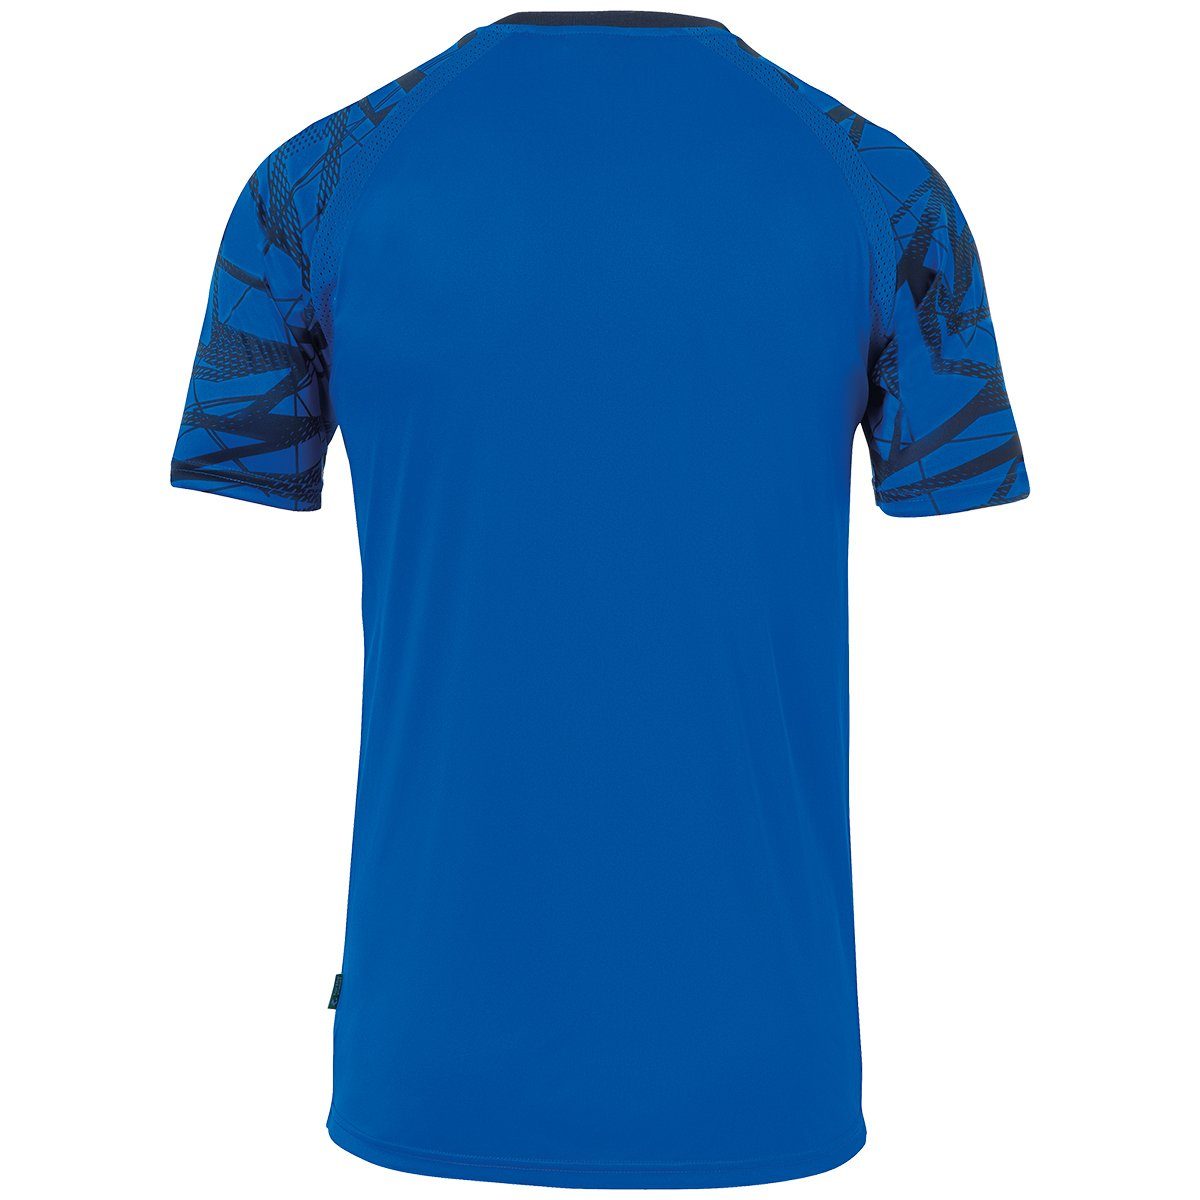 Trainings-T-Shirt uhlsport GOAL TRIKOT 25 azurblau/marine KURZARM Trainingsshirt uhlsport atmungsaktiv